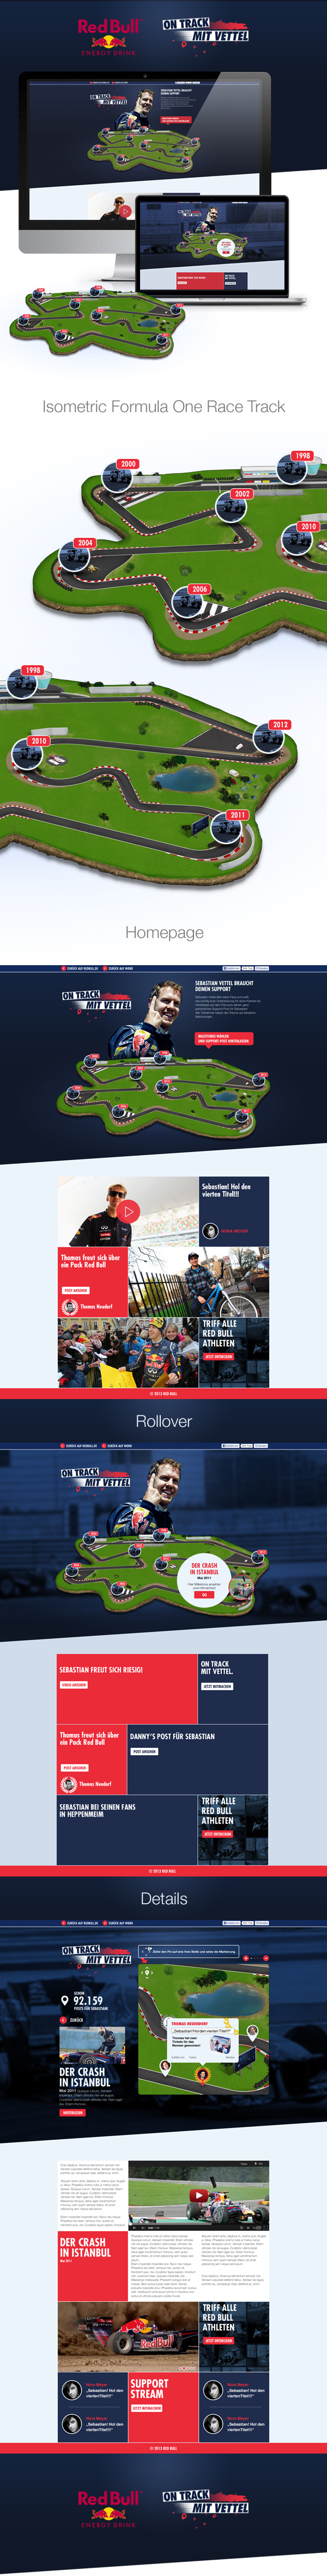 Red Bull  Sebastian Vettel Isometric  Formula One new facebook UI ux game user interface Website interaction